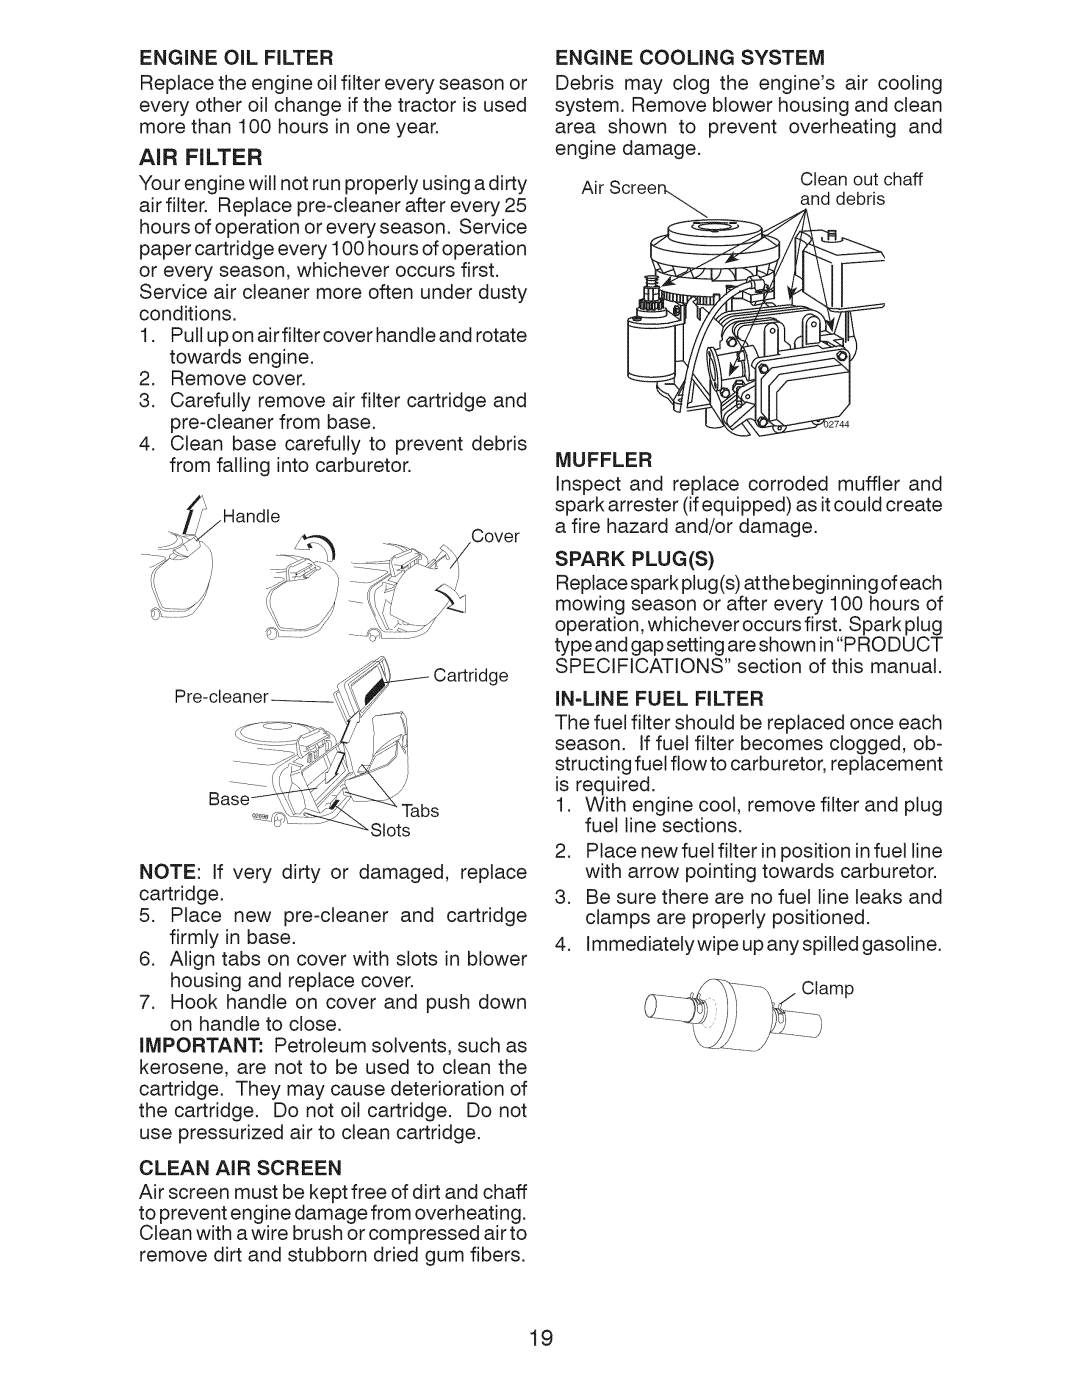 Craftsman 917.289240 owner manual Air Filter, Engine Cooling System, Spark Plugs 